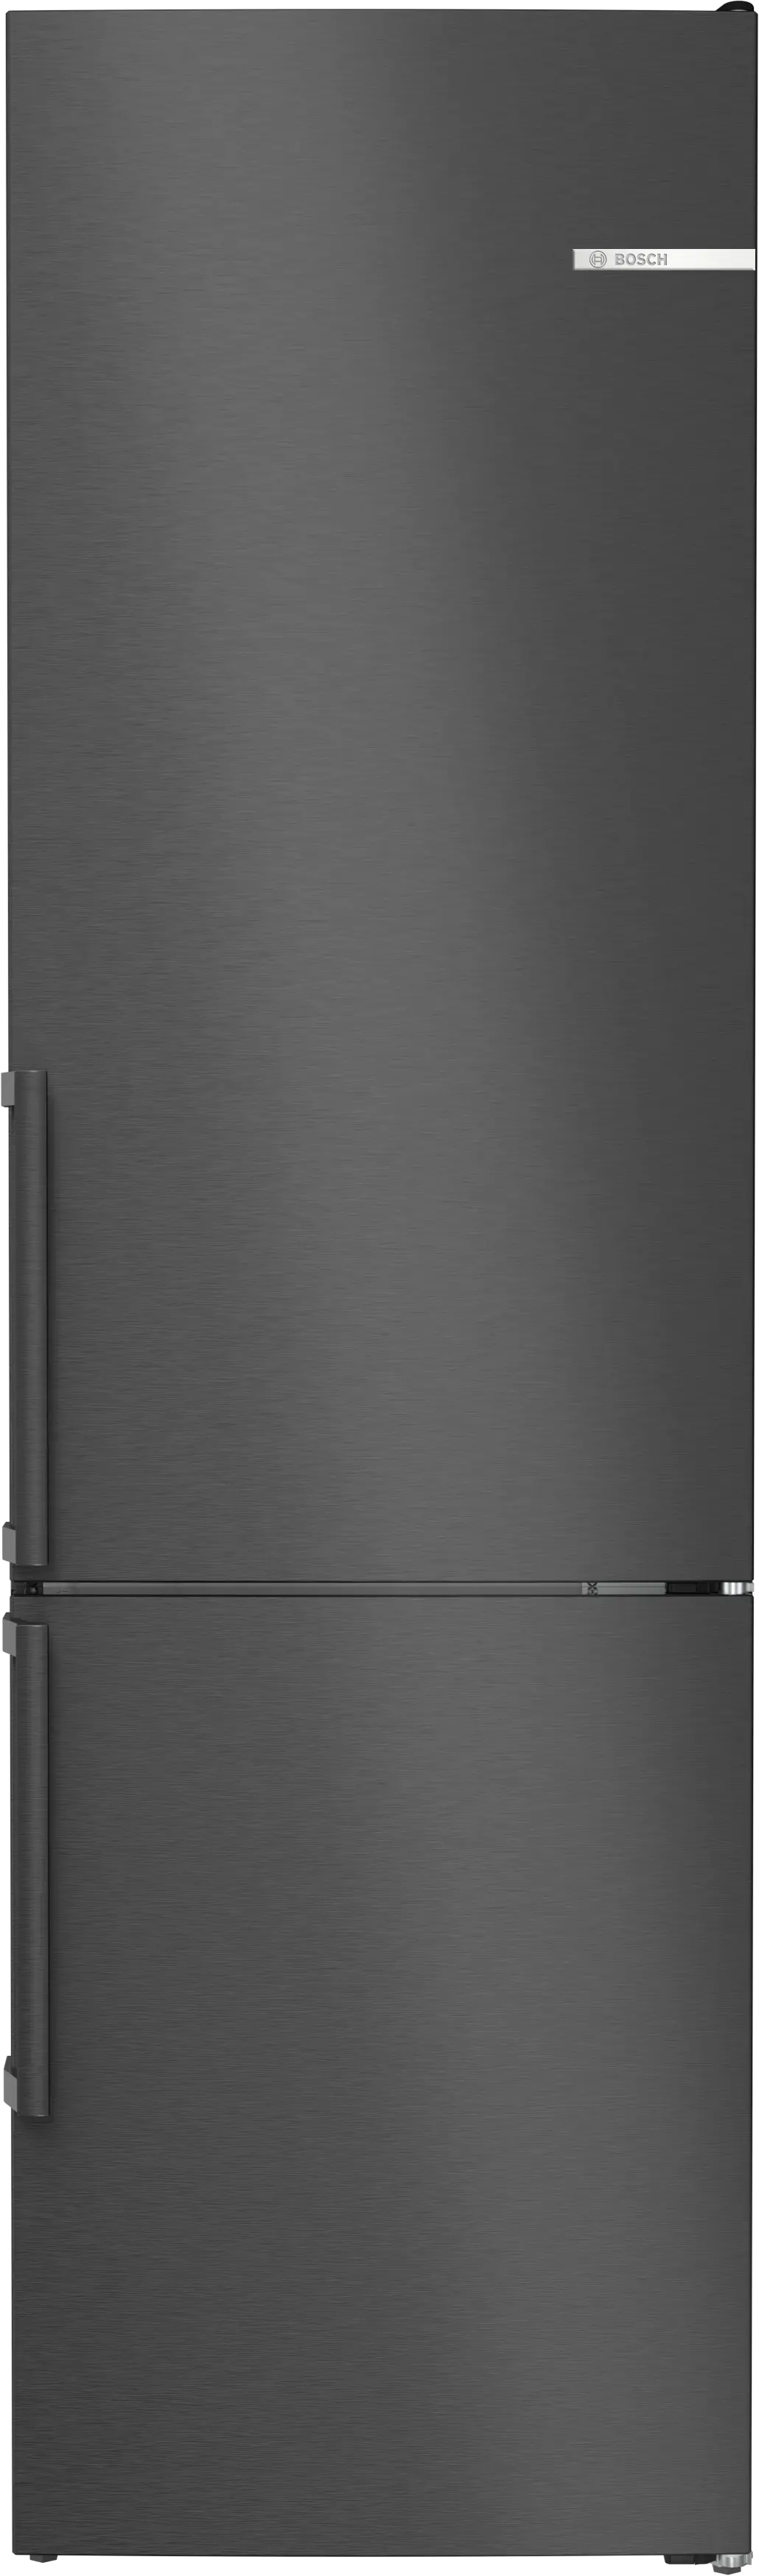 KGN39VXBT free-standing fridge-freezer with freezer at bottom